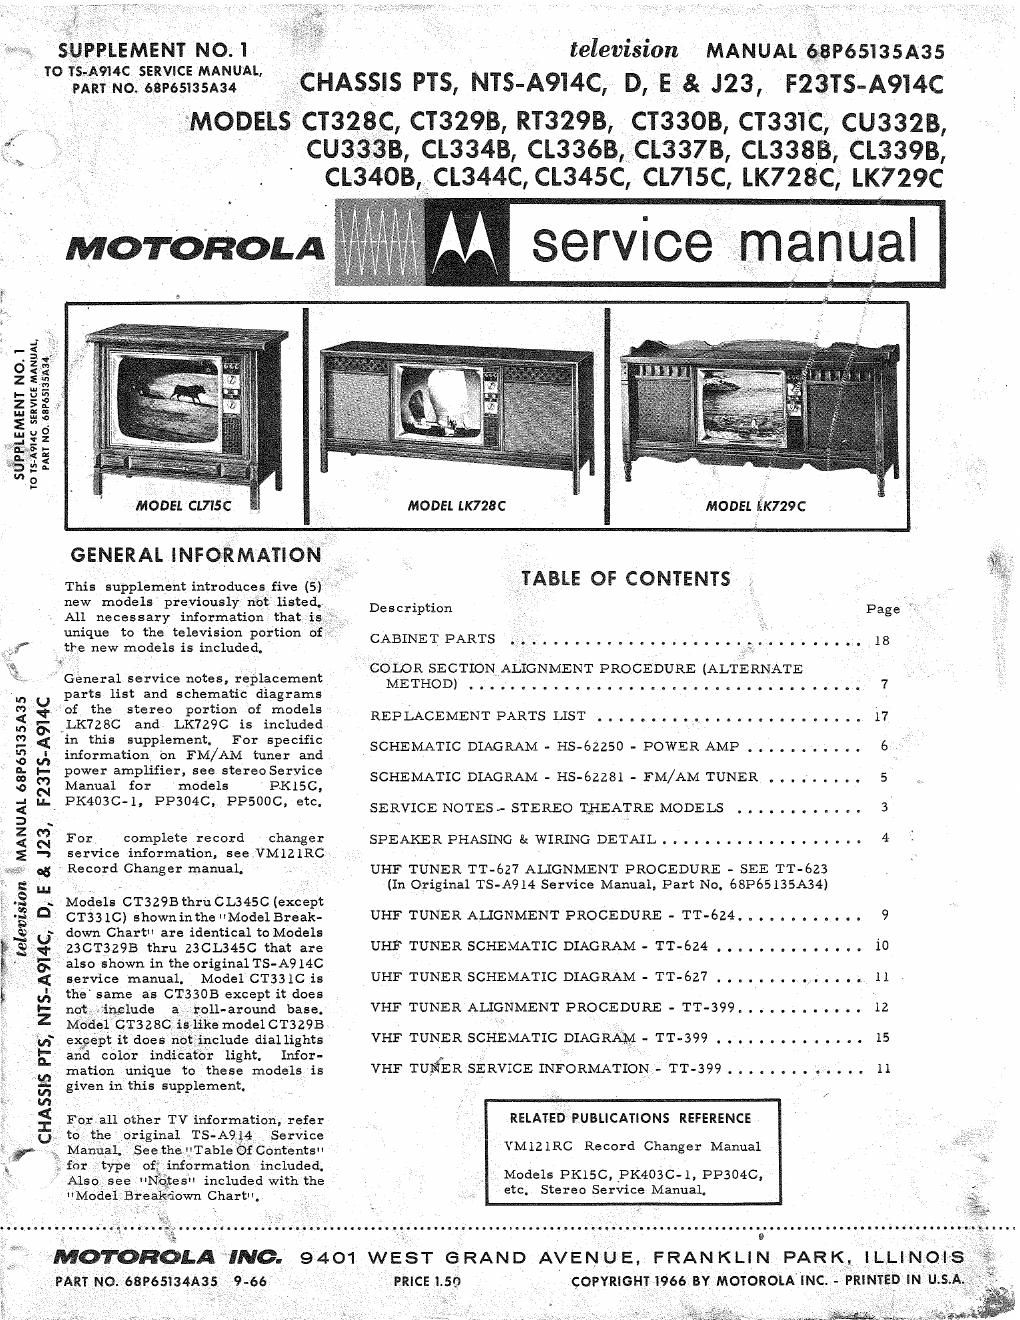 motorola cl 340 b service manual